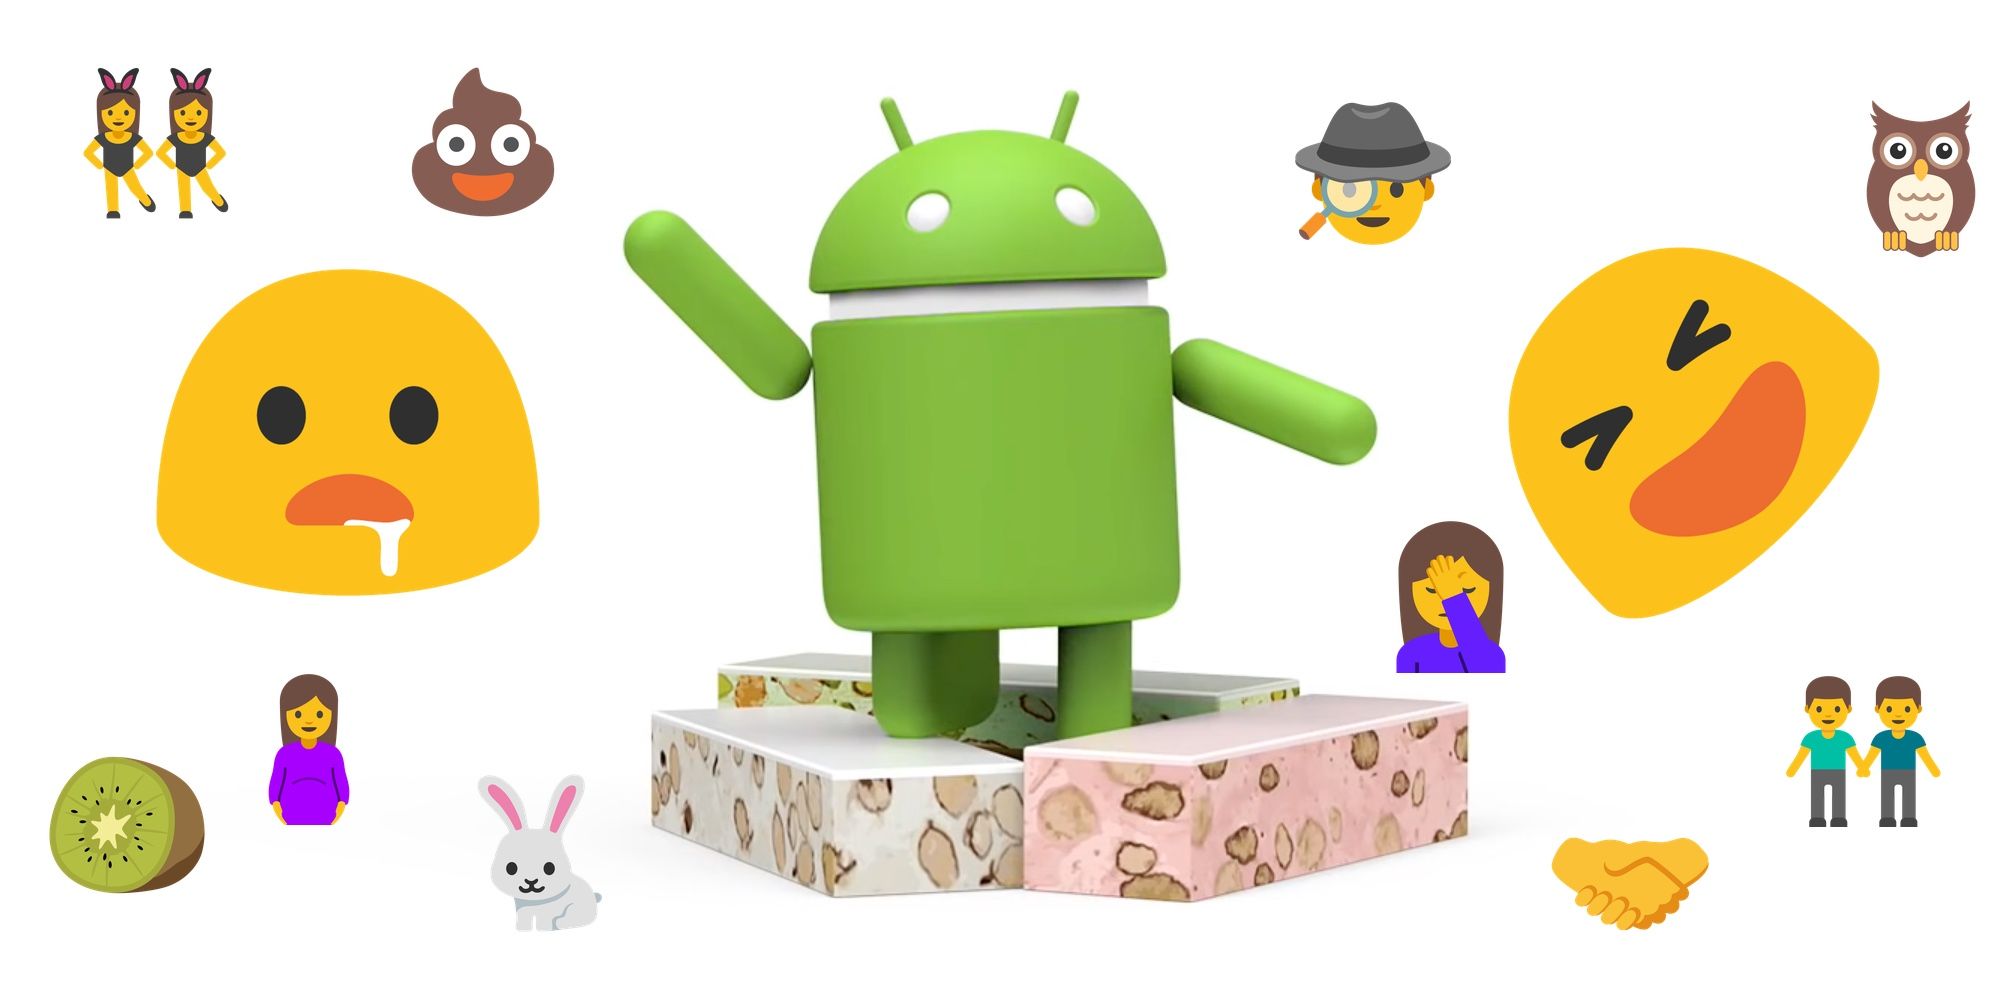 Android 7.0 Nougat Emoji Changelog